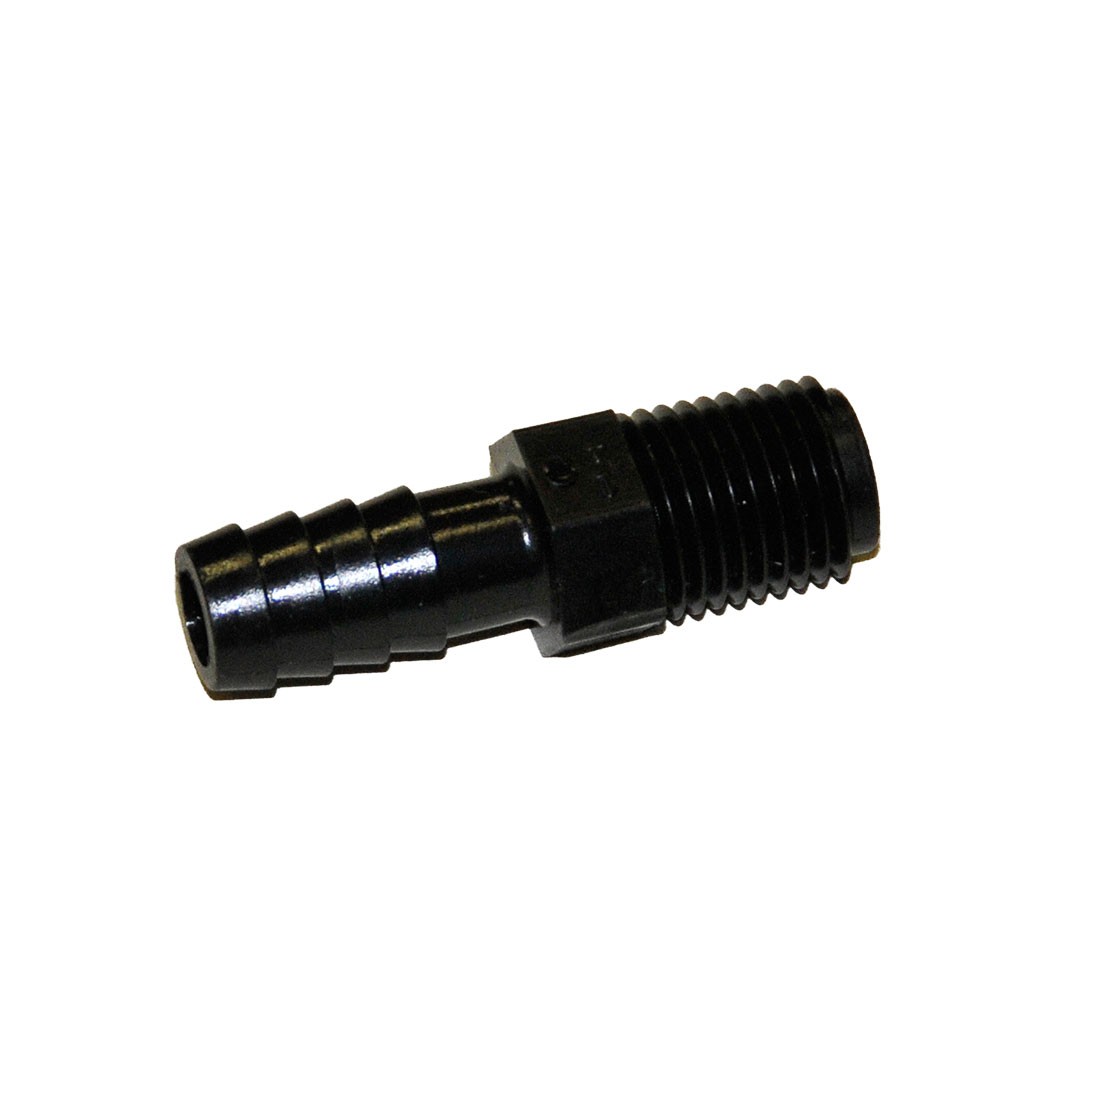 Hush Pump Barb Adapter - 1/4" x 3/8"